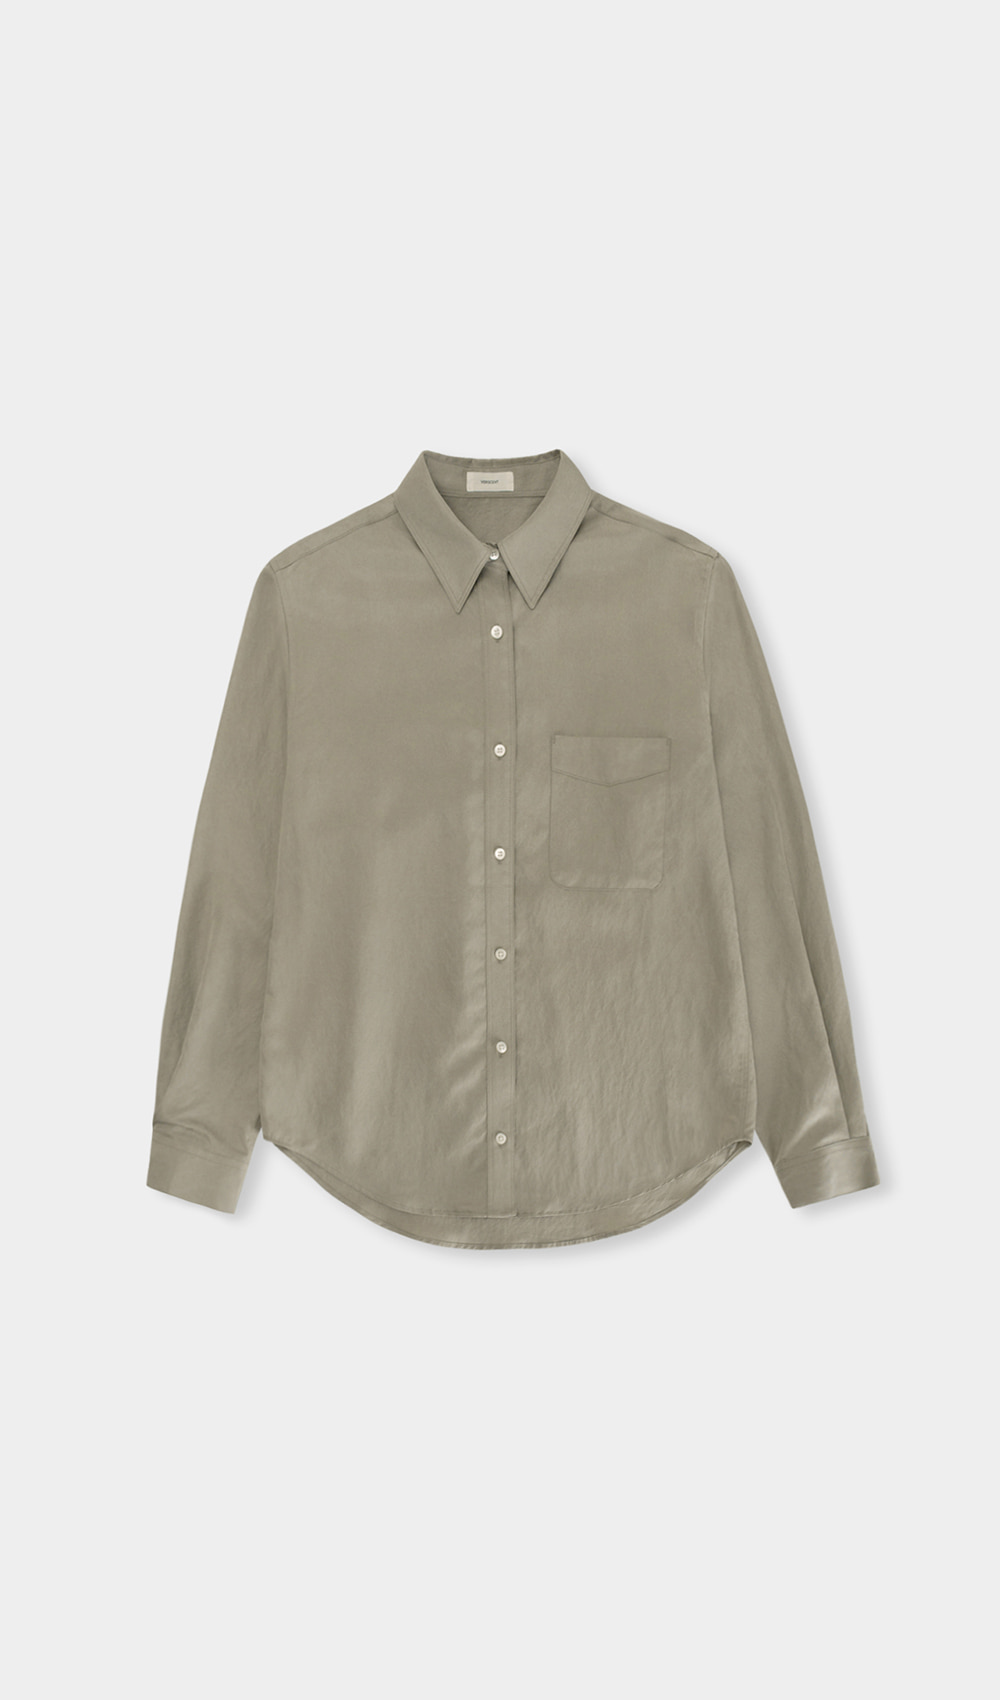 Neutral paulo shirts (khaki)